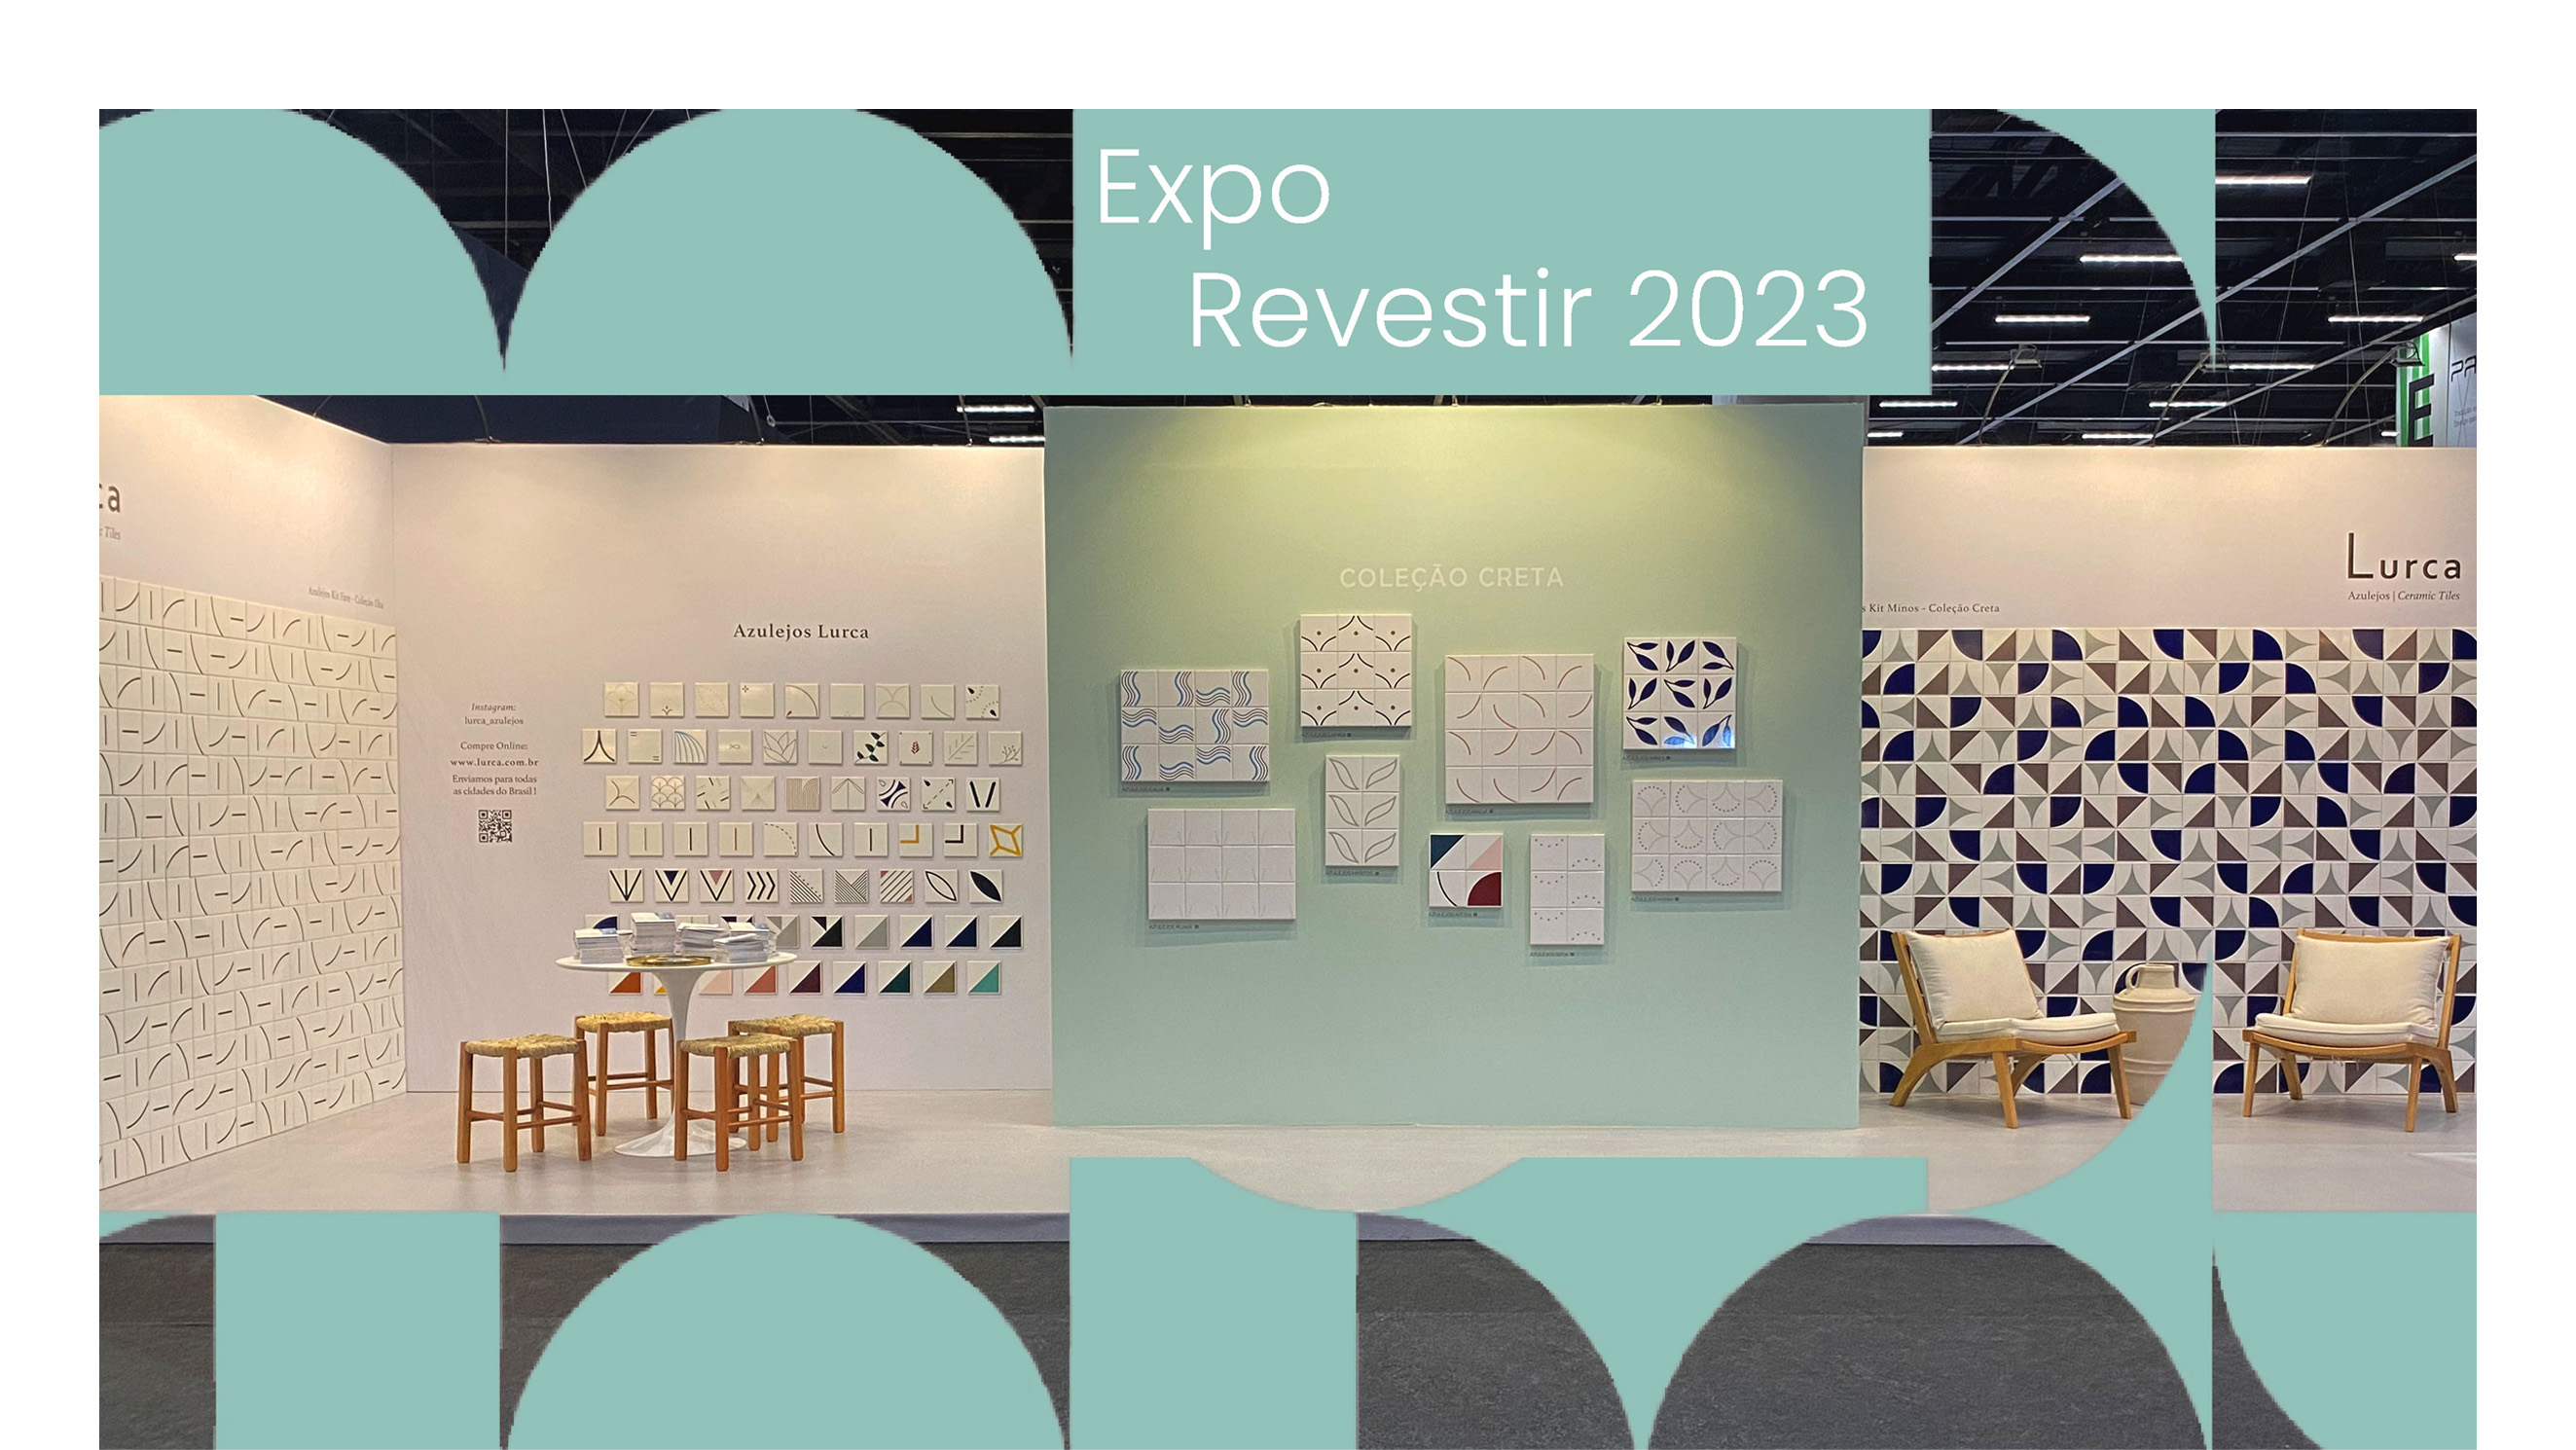 Expo Revestir 2023!